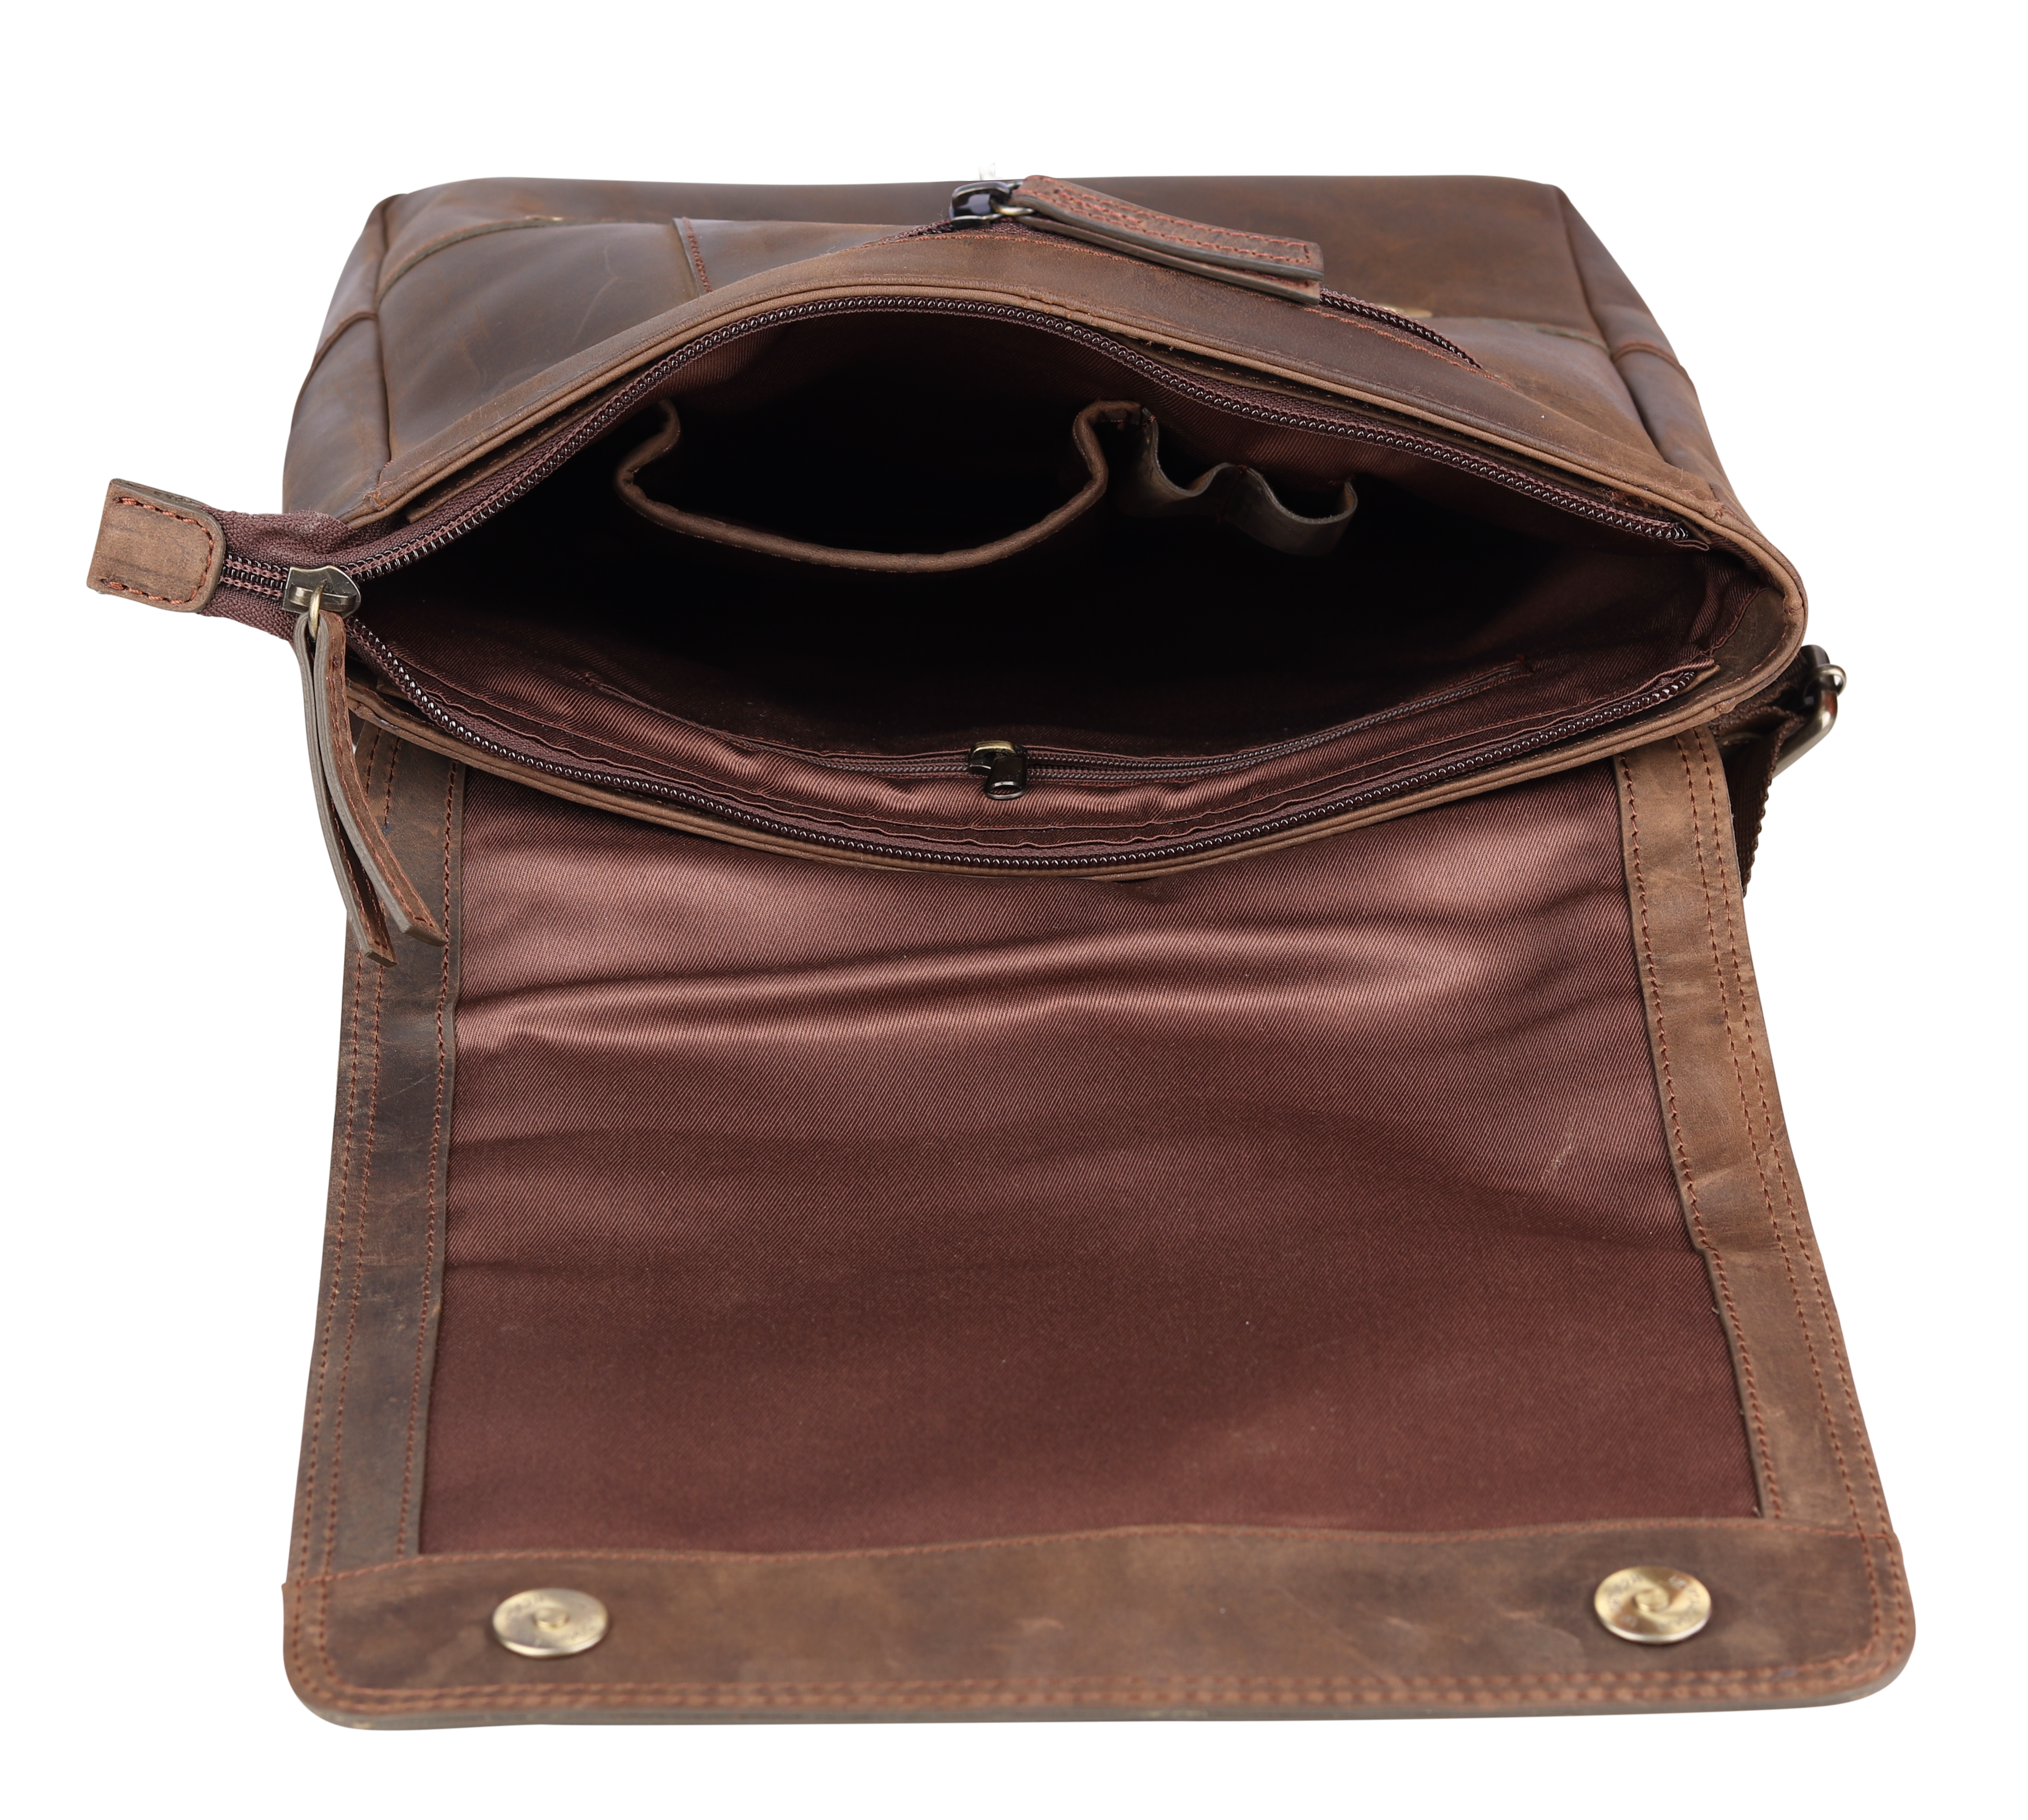 BOL/Open Road Hunter Leather Messanger Bag